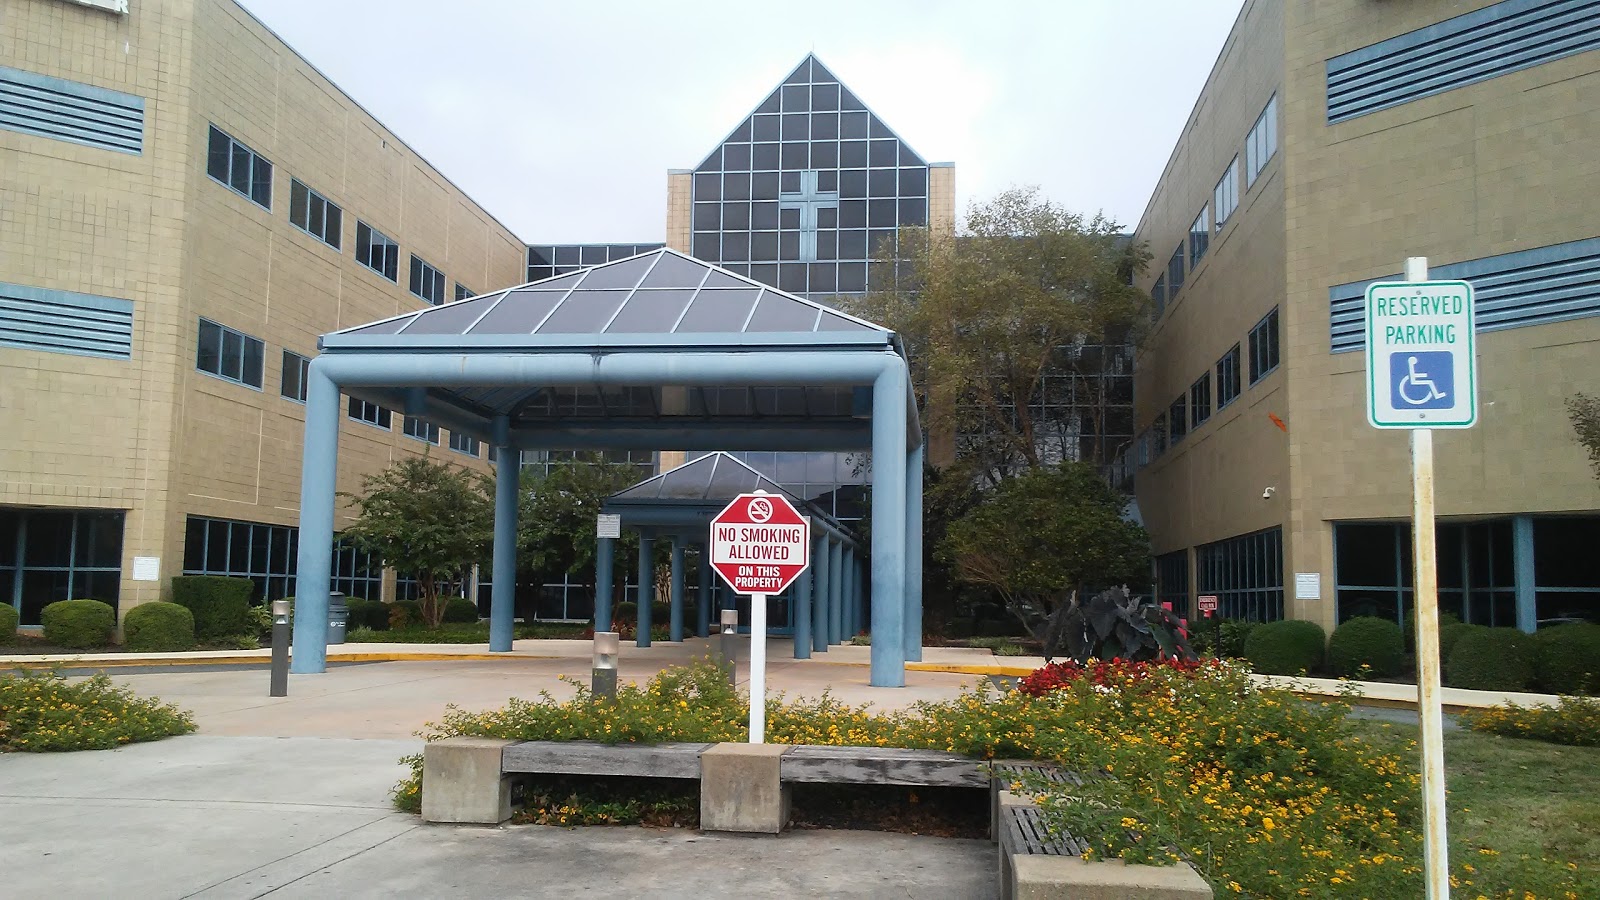 DeKalb Regional Medical Center